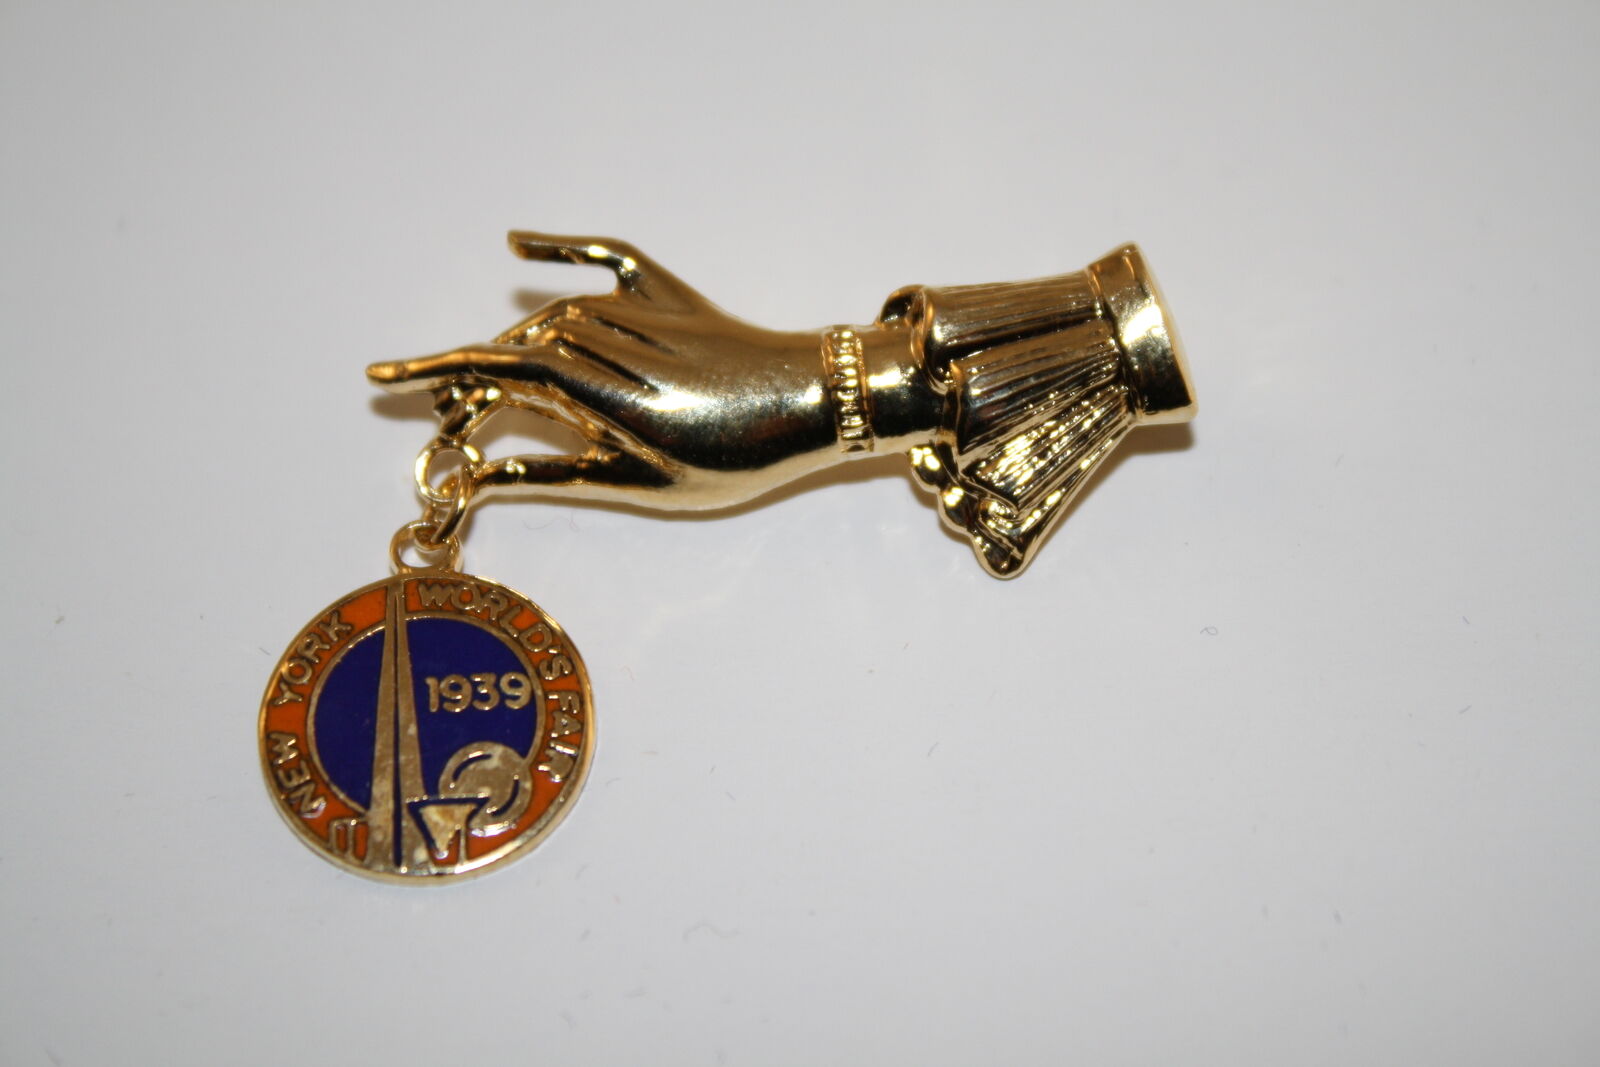 1939 New York World's Fair HAND Trylon Perisphere Metal Brooch LAPEL PIN